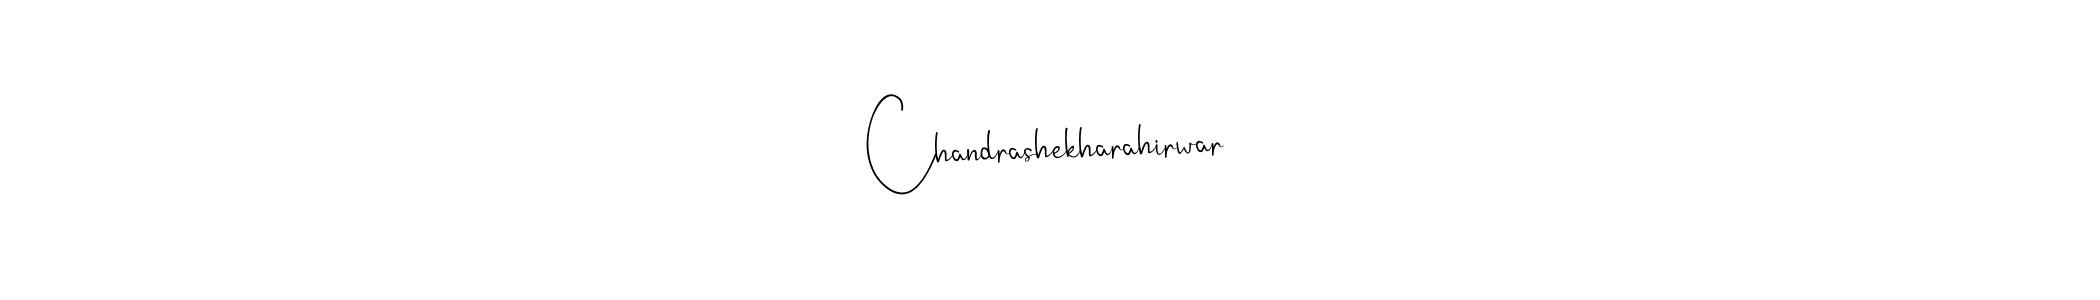 How to Draw Chandrashekharahirwar signature style? Andilay-7BmLP is a latest design signature styles for name Chandrashekharahirwar. Chandrashekharahirwar signature style 4 images and pictures png